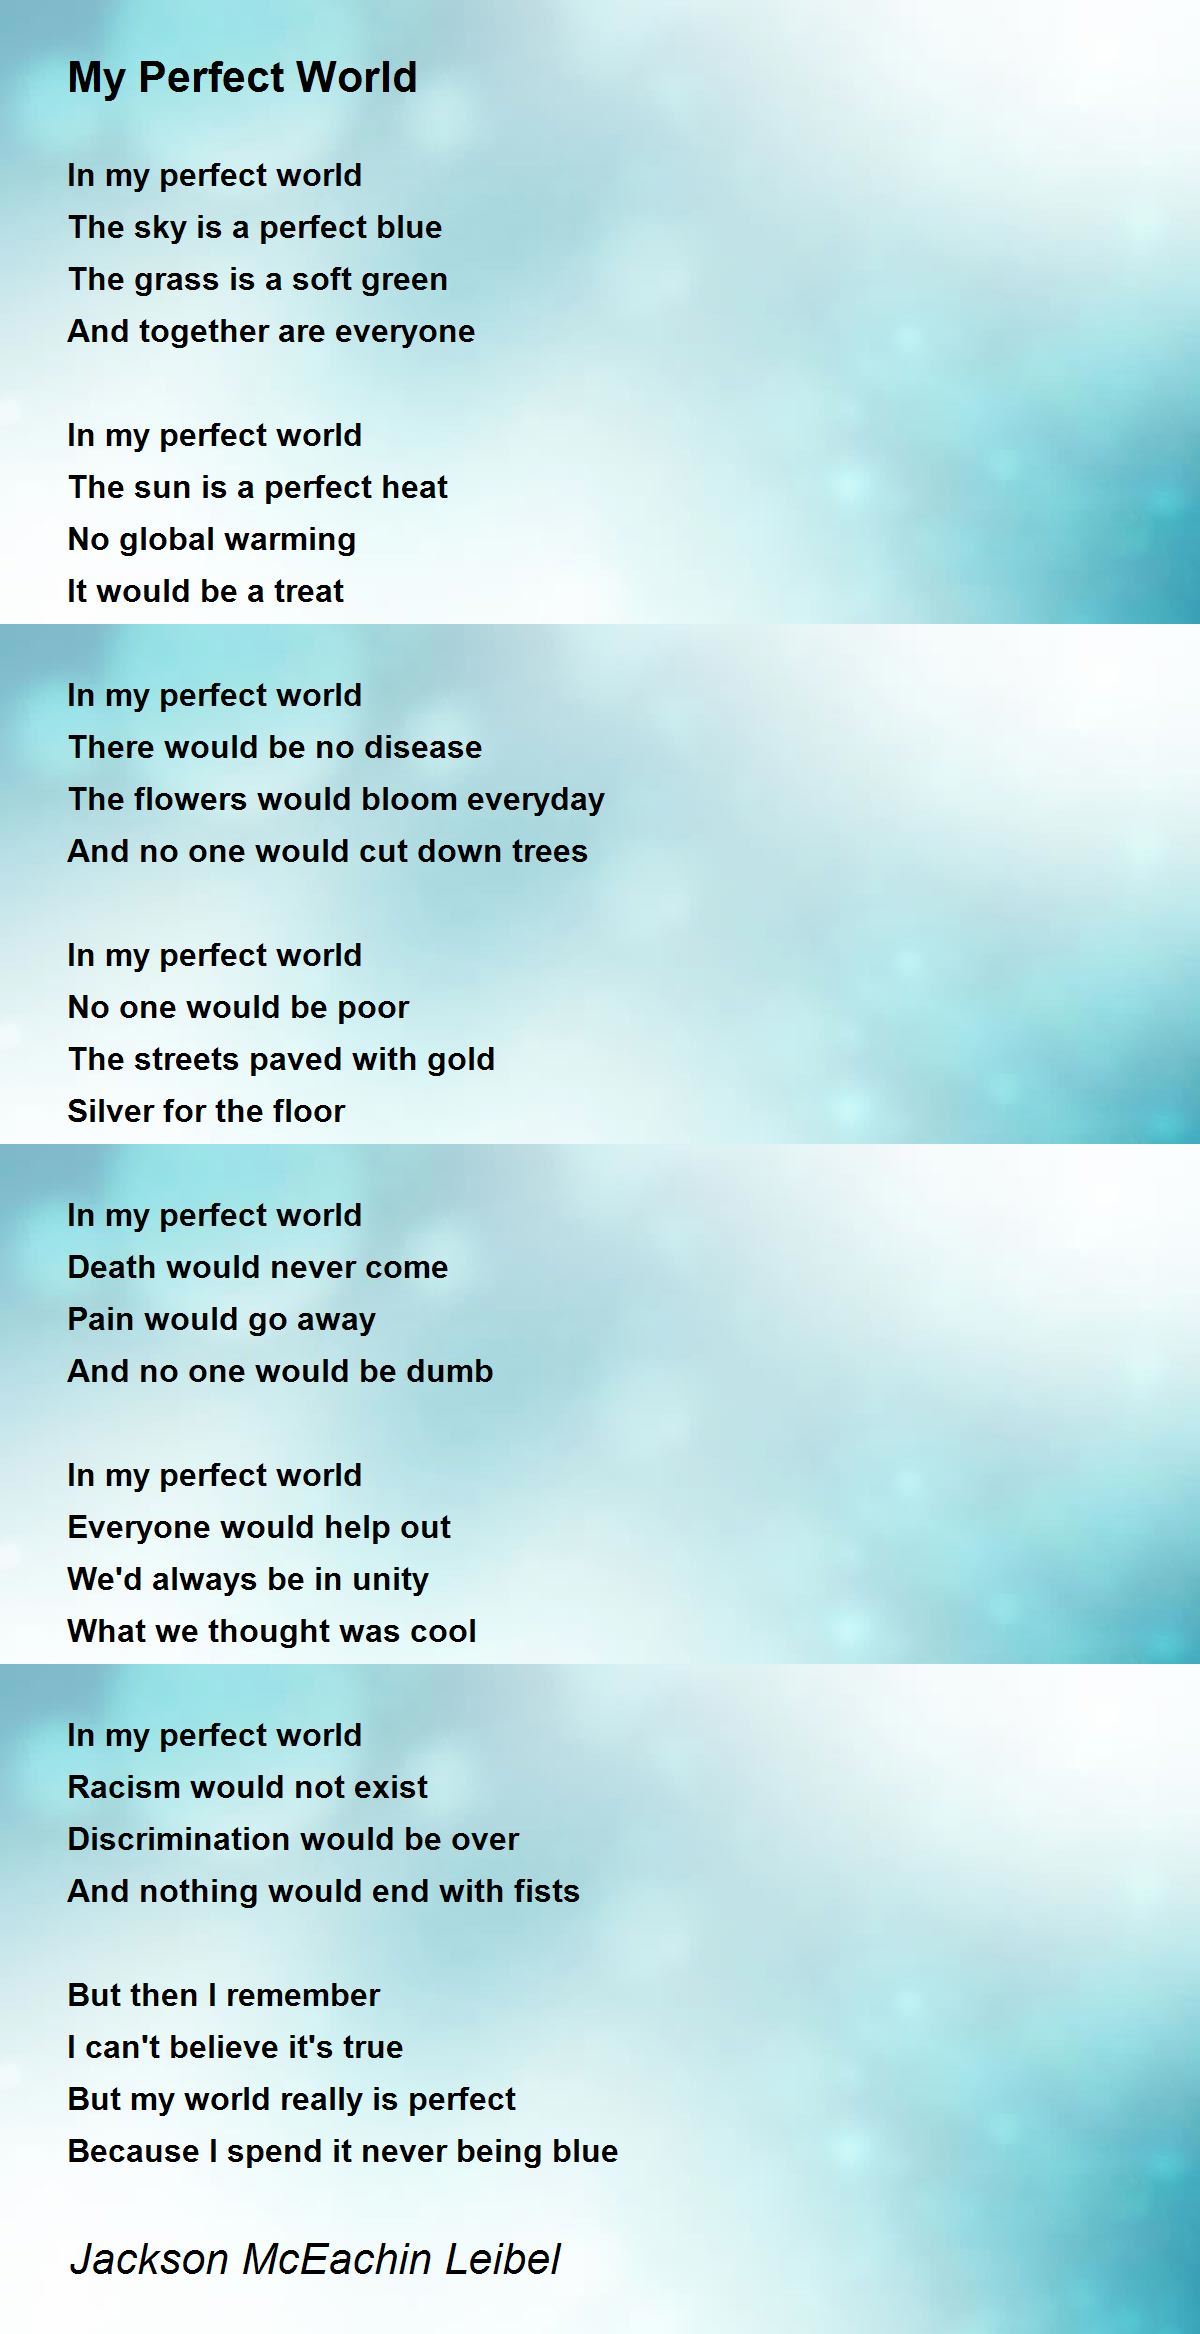 My Perfect World Poem by Jackson McEachin Leibel - Poem Hunter